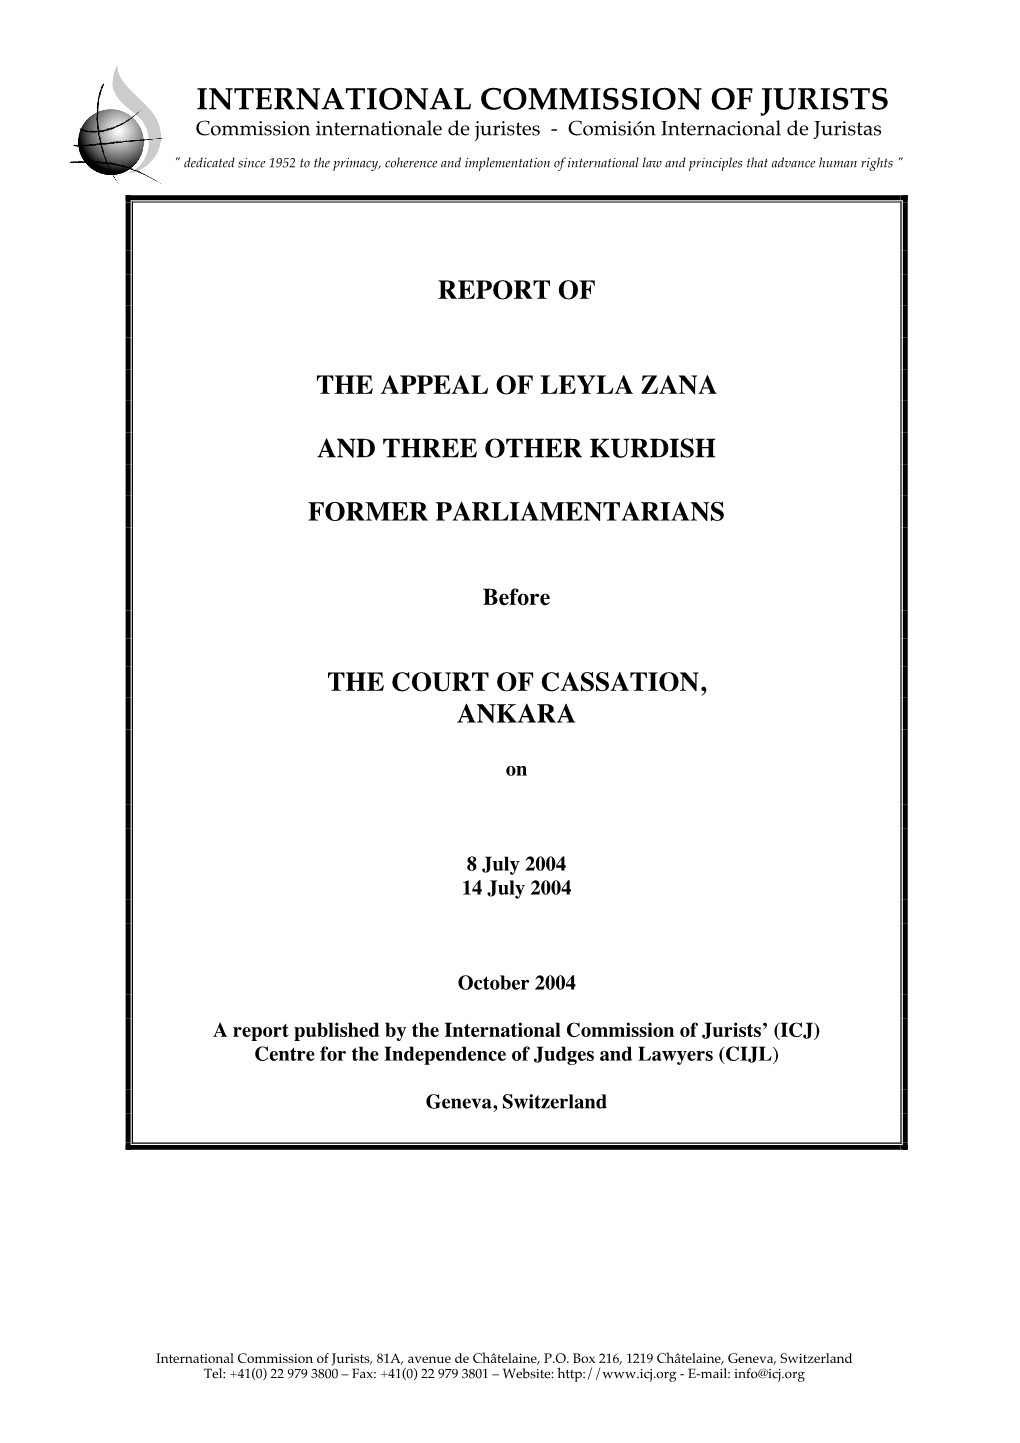 Turkey-Leyla Zana Appeal-Trial Observer-Report-2004